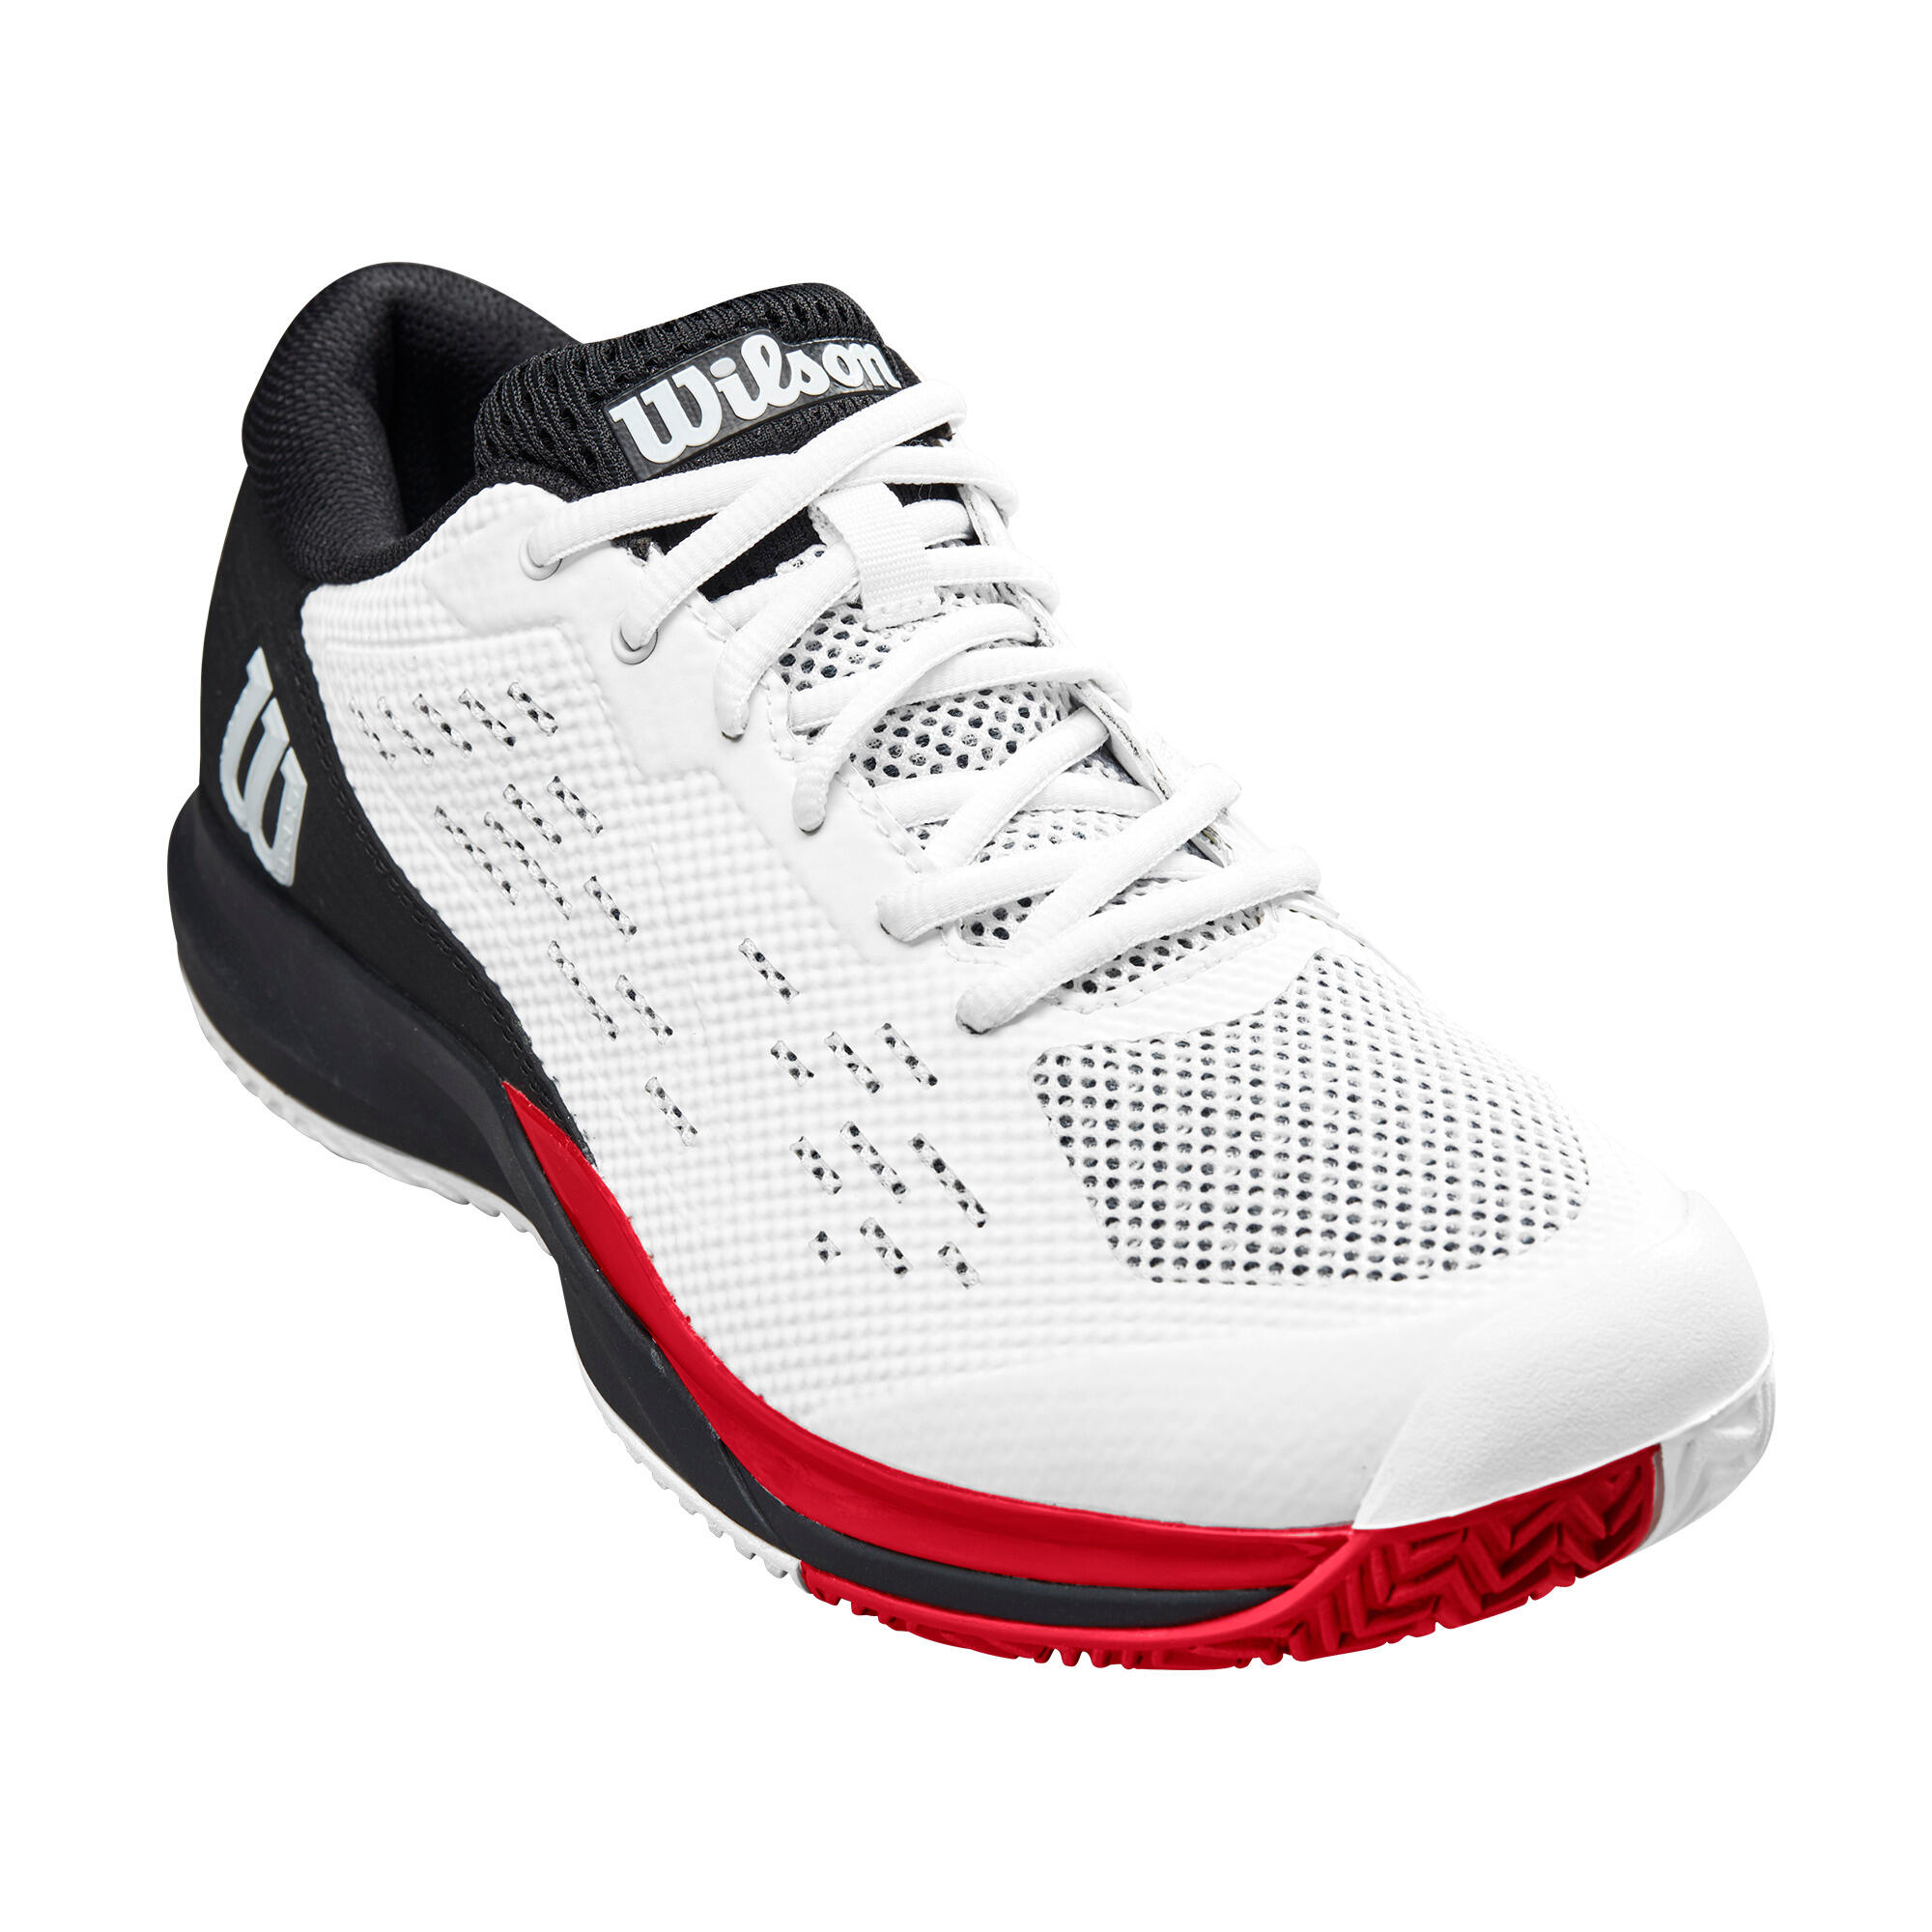 Men's Multi-Court Tennis Shoes Rush Pro Ace - White/Black 2/6